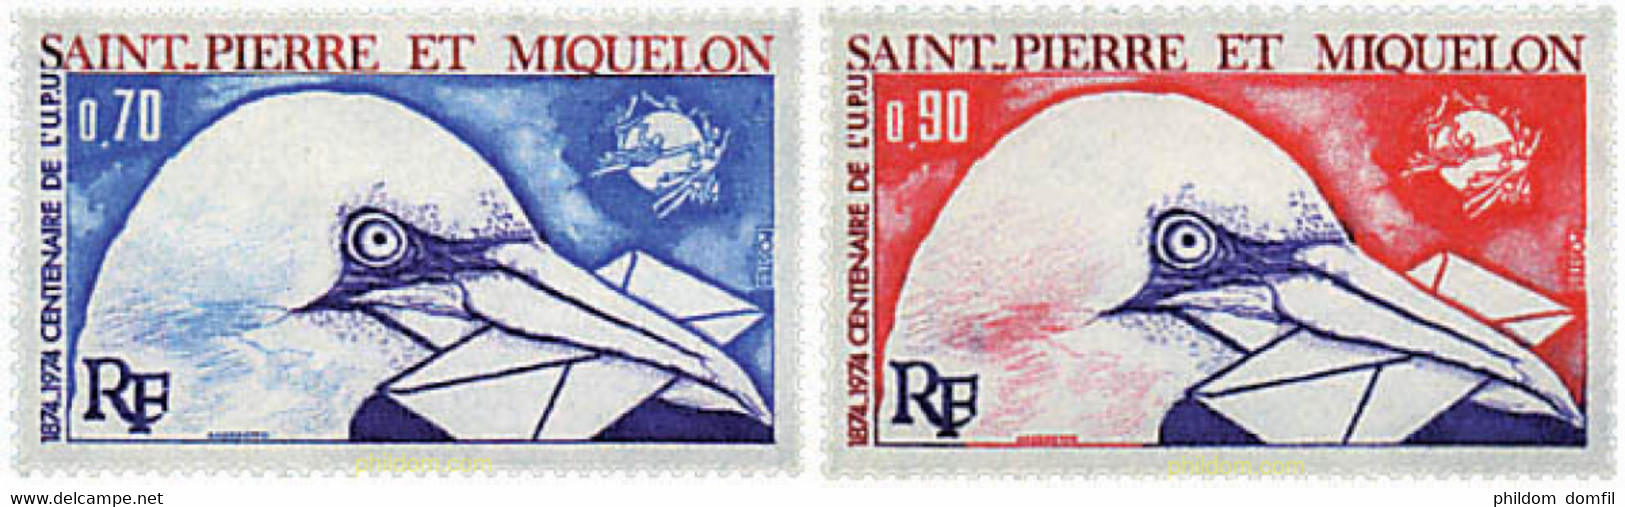 36943 MNH SAN PEDRO Y MIQUELON 1974 CENTENARIO DE LA UNION POSTAL UNIVERSAL - Used Stamps